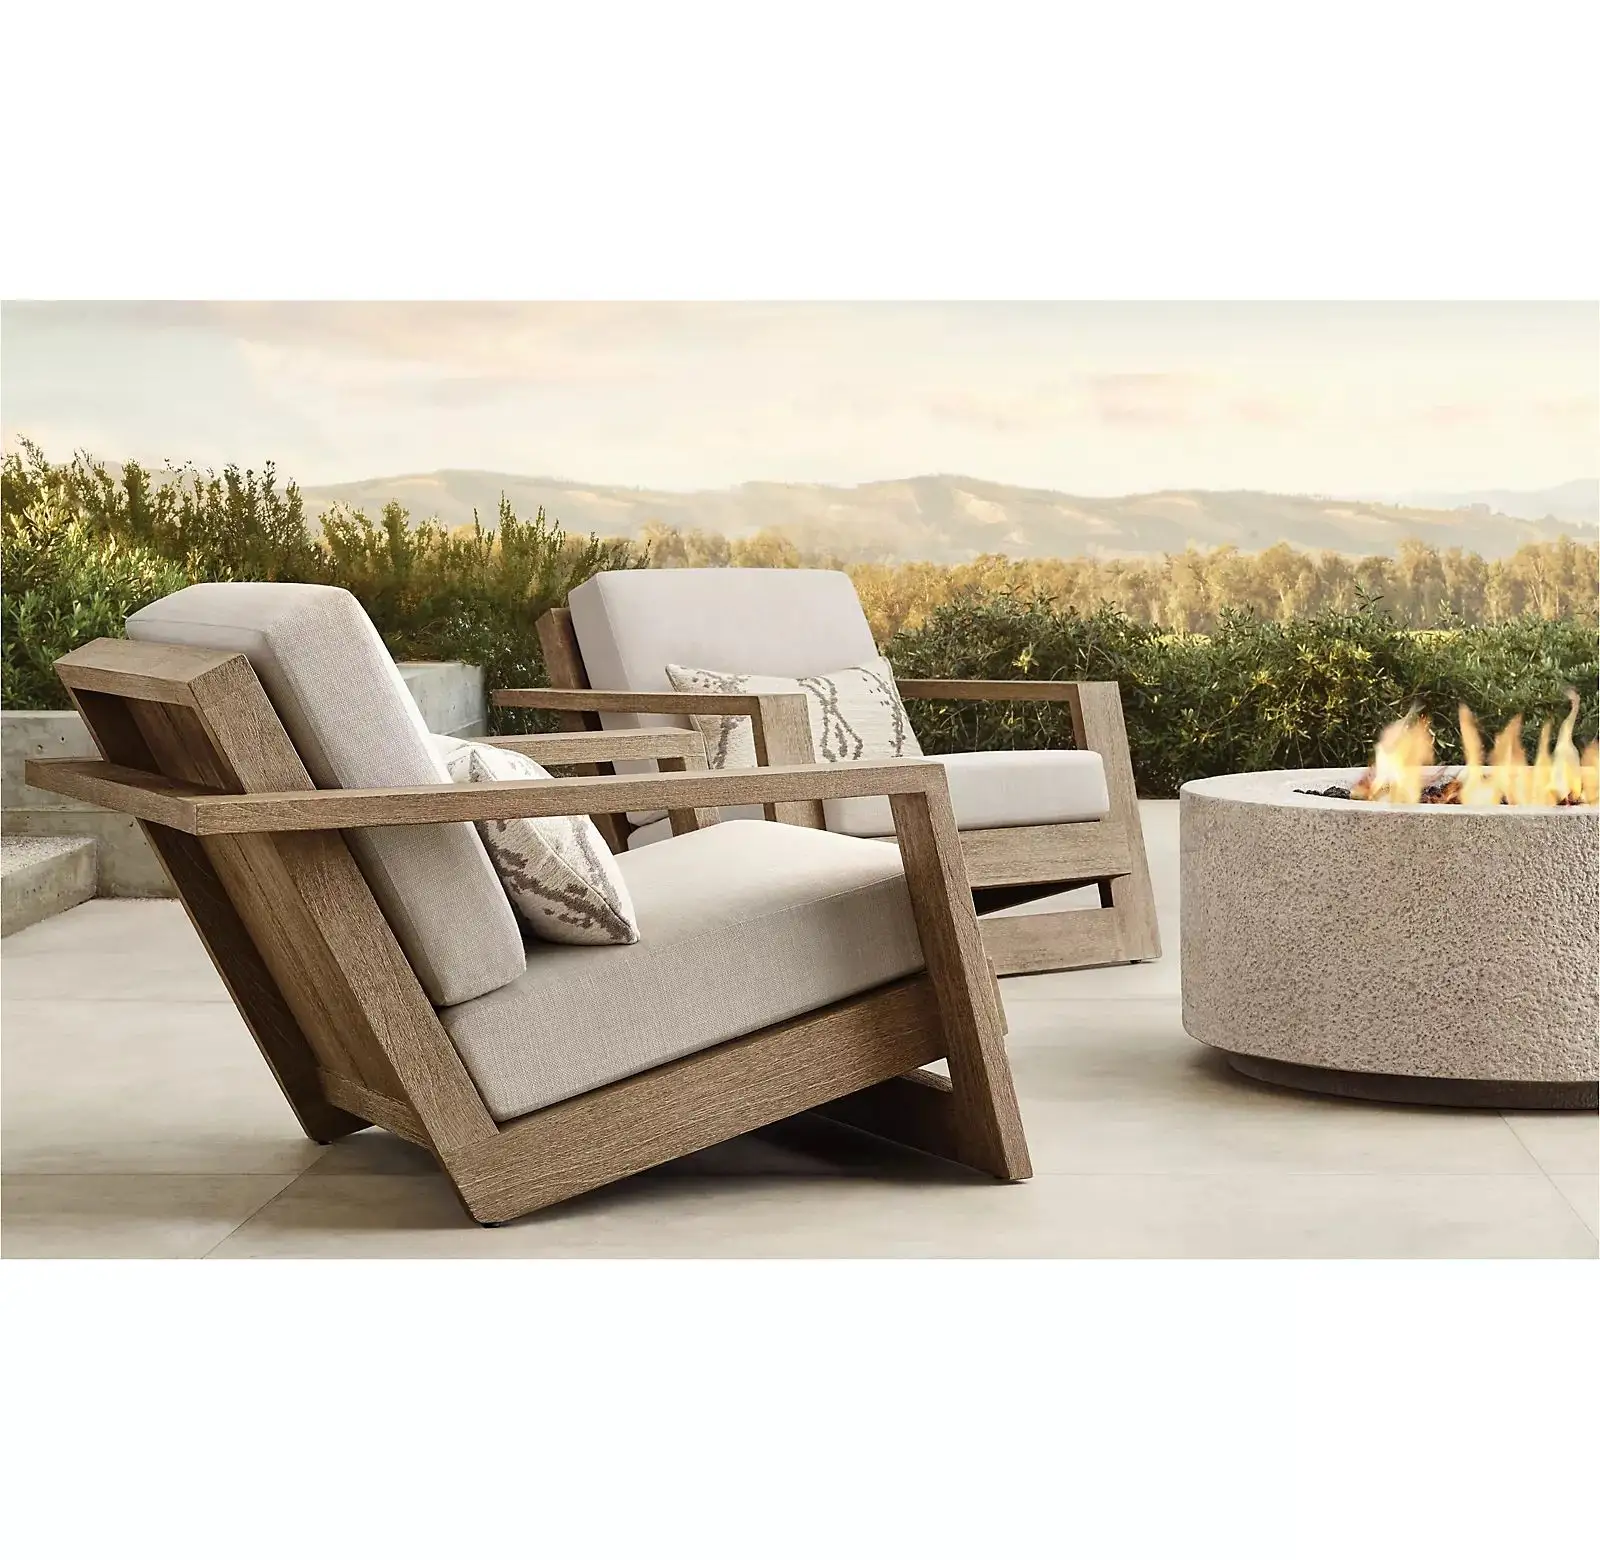 Zeen Modern Outdoor Furniture Teak Lounge Chair Wood Garden Sofa Lounger Quick Drying Cotton Single Sofa Chair Rh Teak Furniture